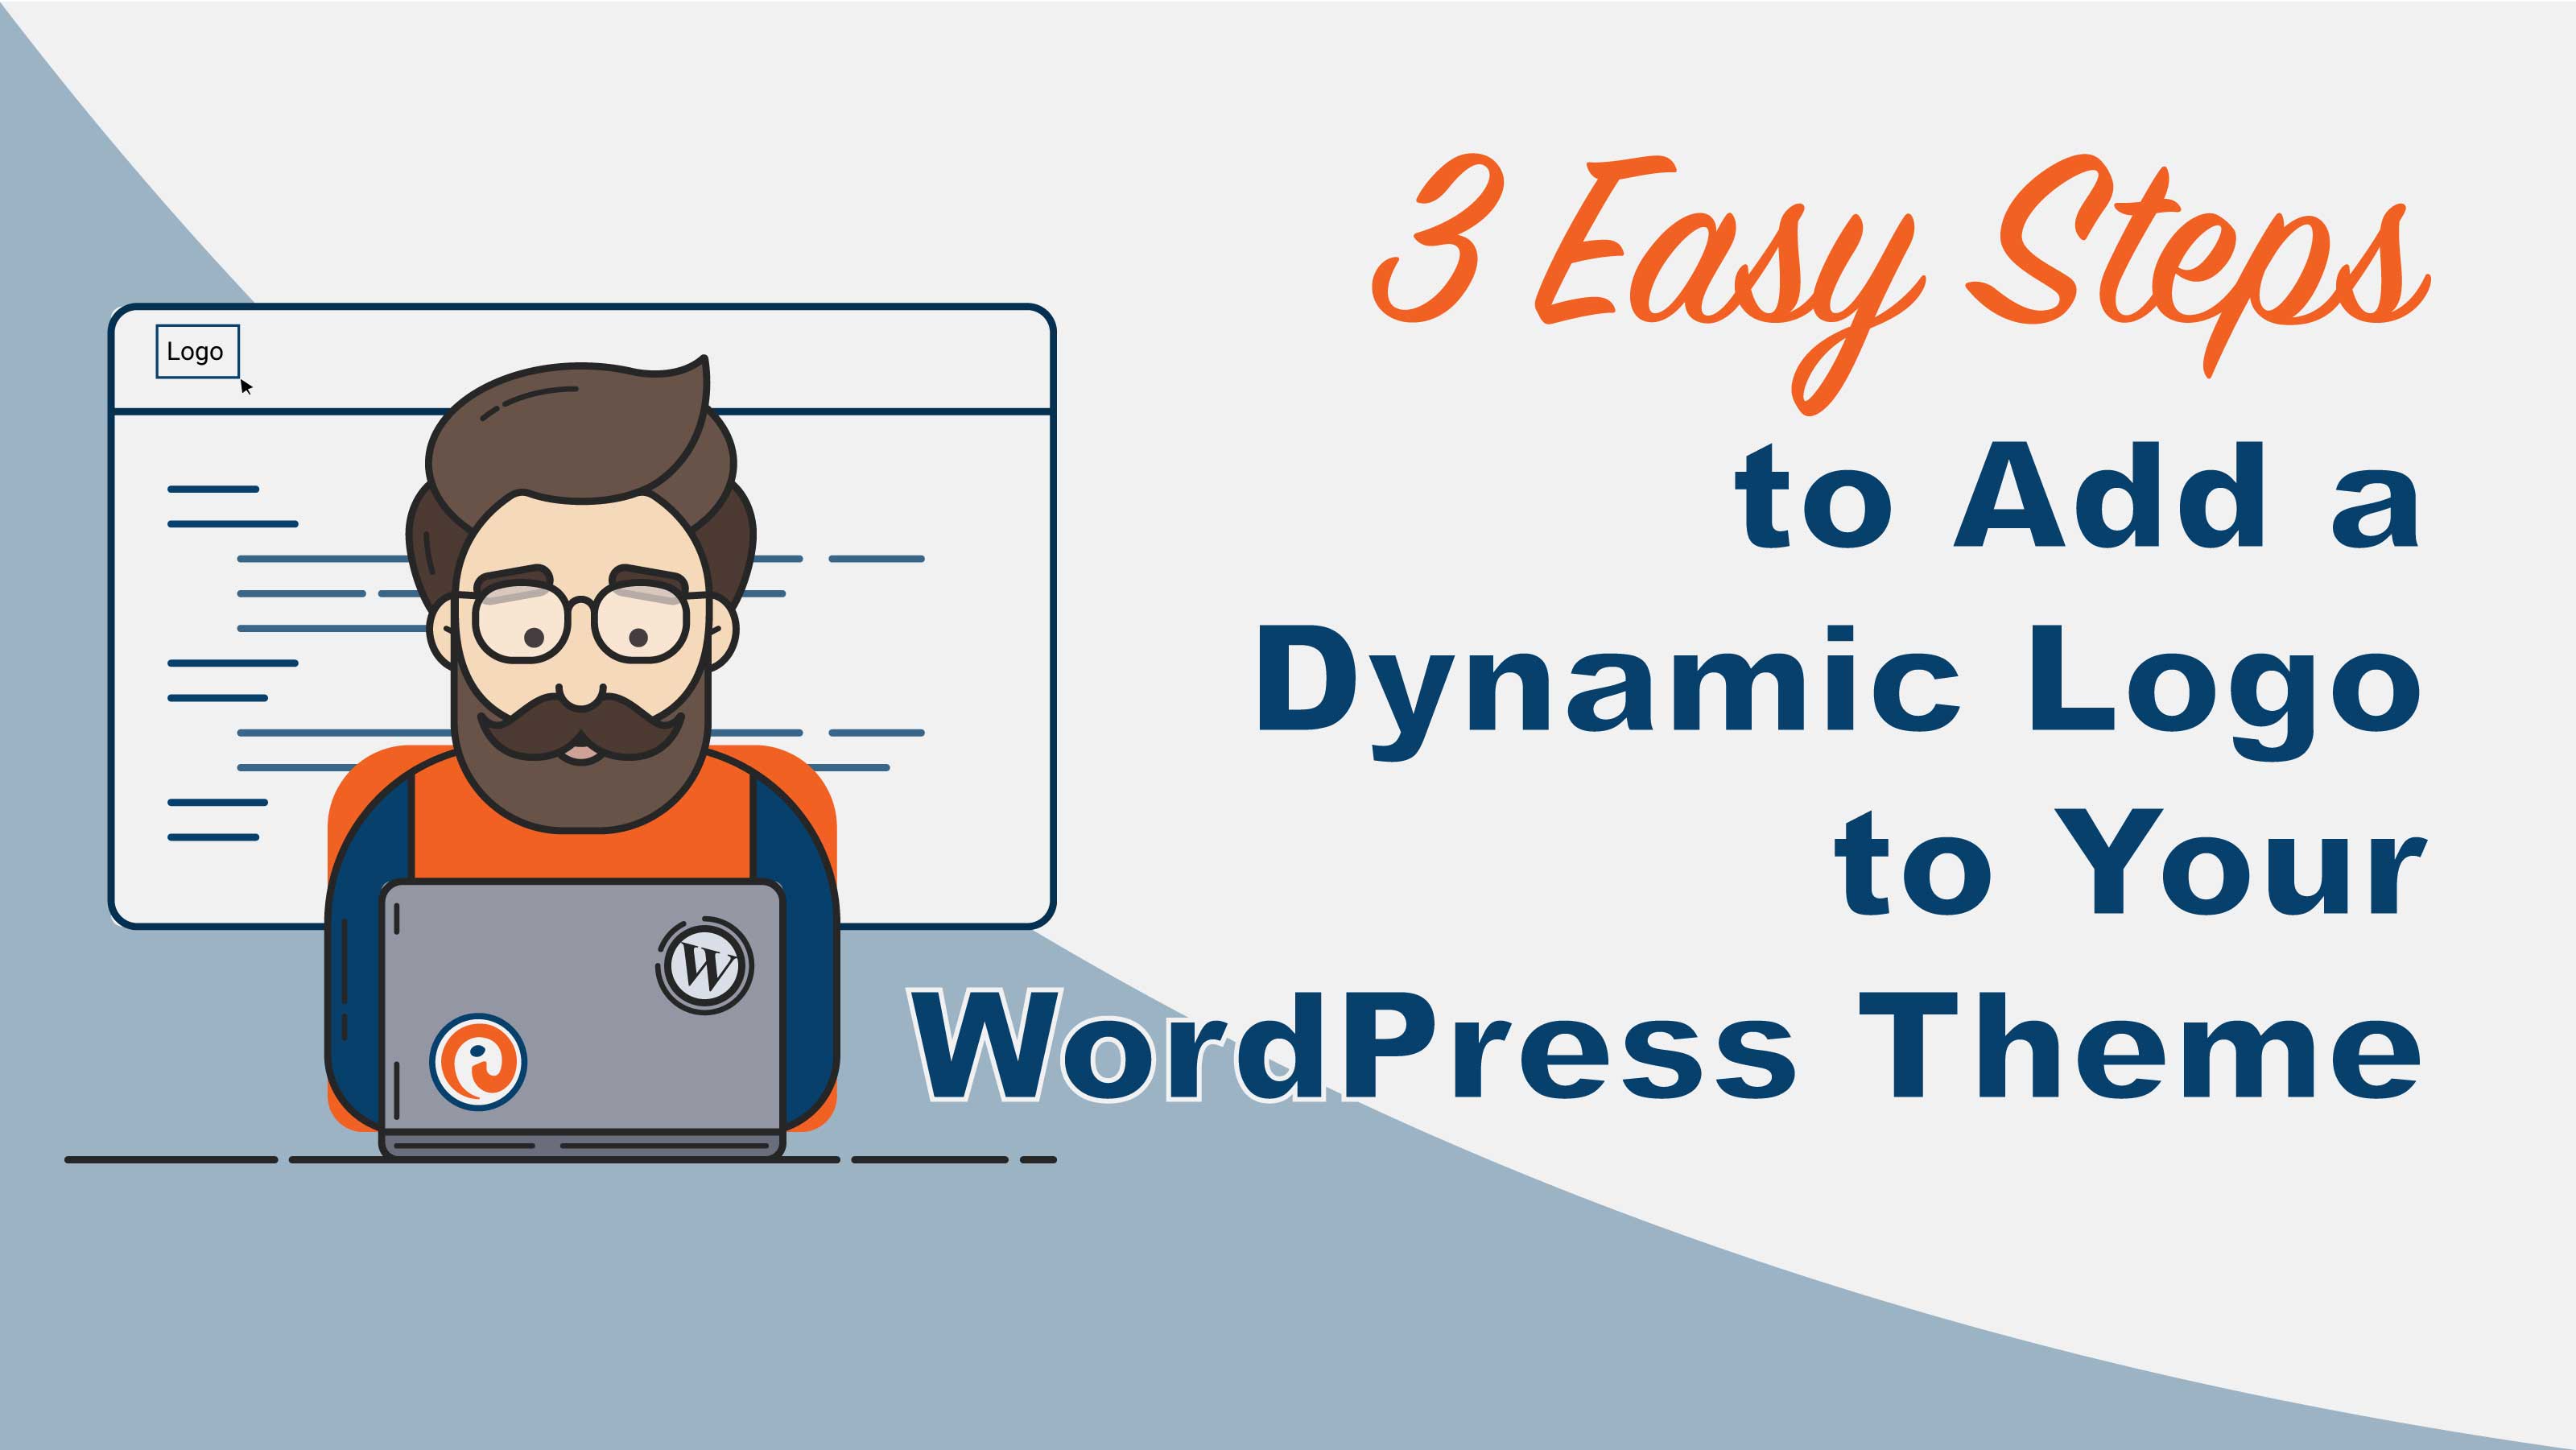 3 Easy Steps to Add a Dynamic Logo to Your WordPress Theme